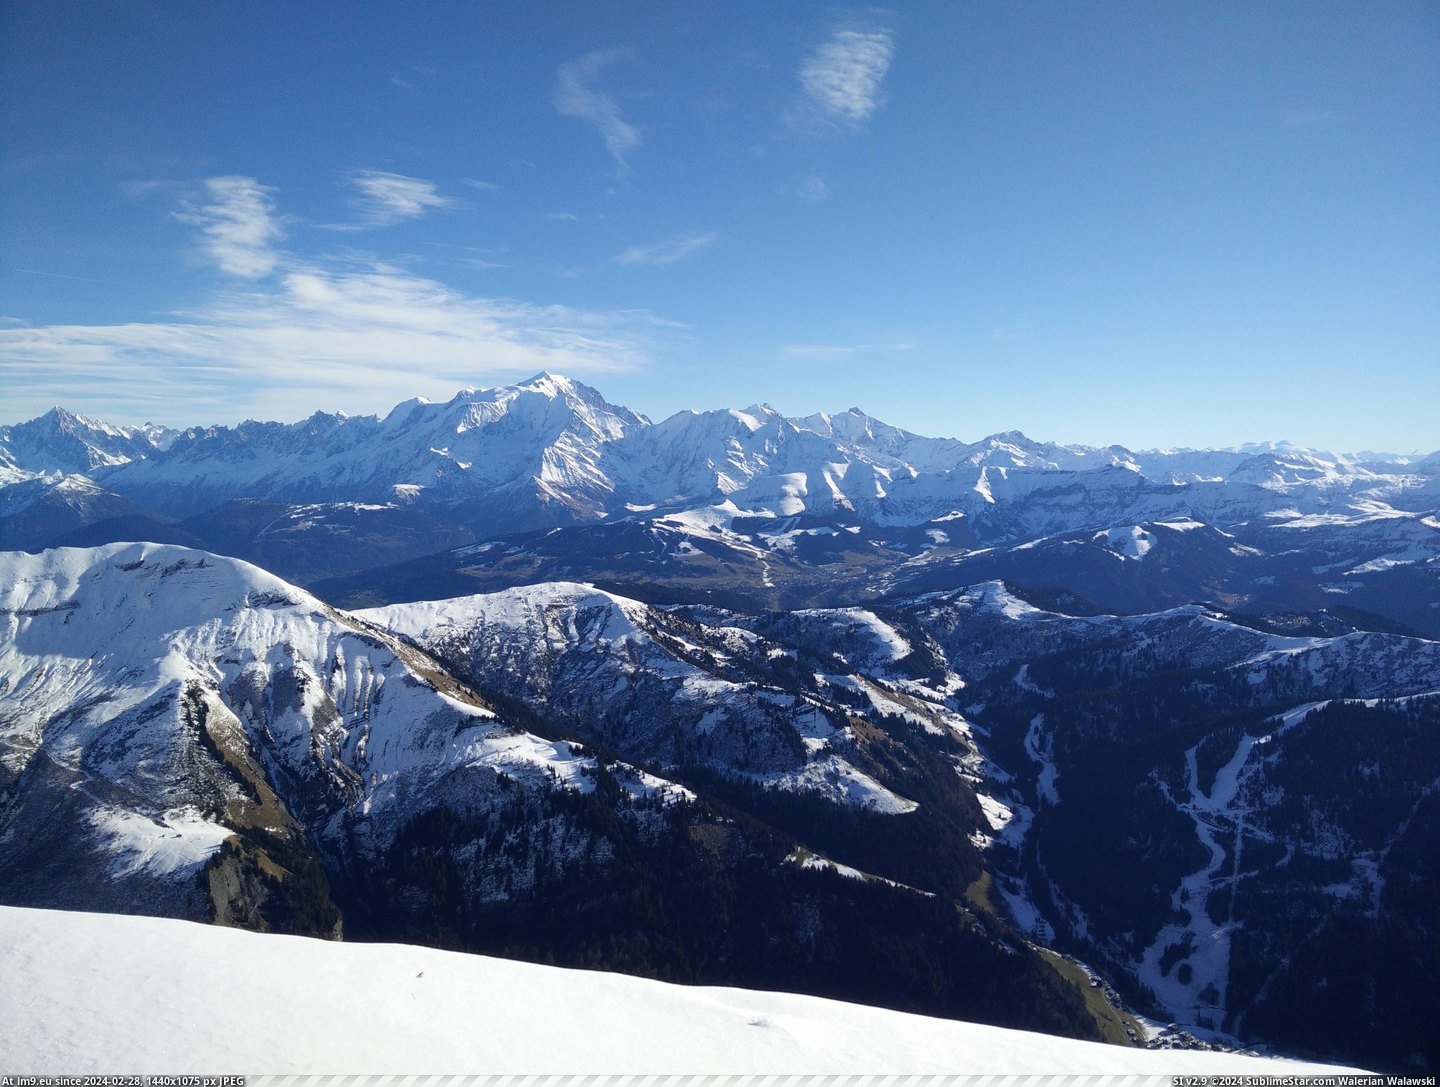 #Snow #Mountain #Peak #Blanc #Ski #Mont #Range #Resort #Usual [Earthporn] View of Mont Blanc mountain range (with less snow than usual) from La Balme peak (2,186m) at La Clusaz ski resort, F Pic. (Изображение из альбом My r/EARTHPORN favs))